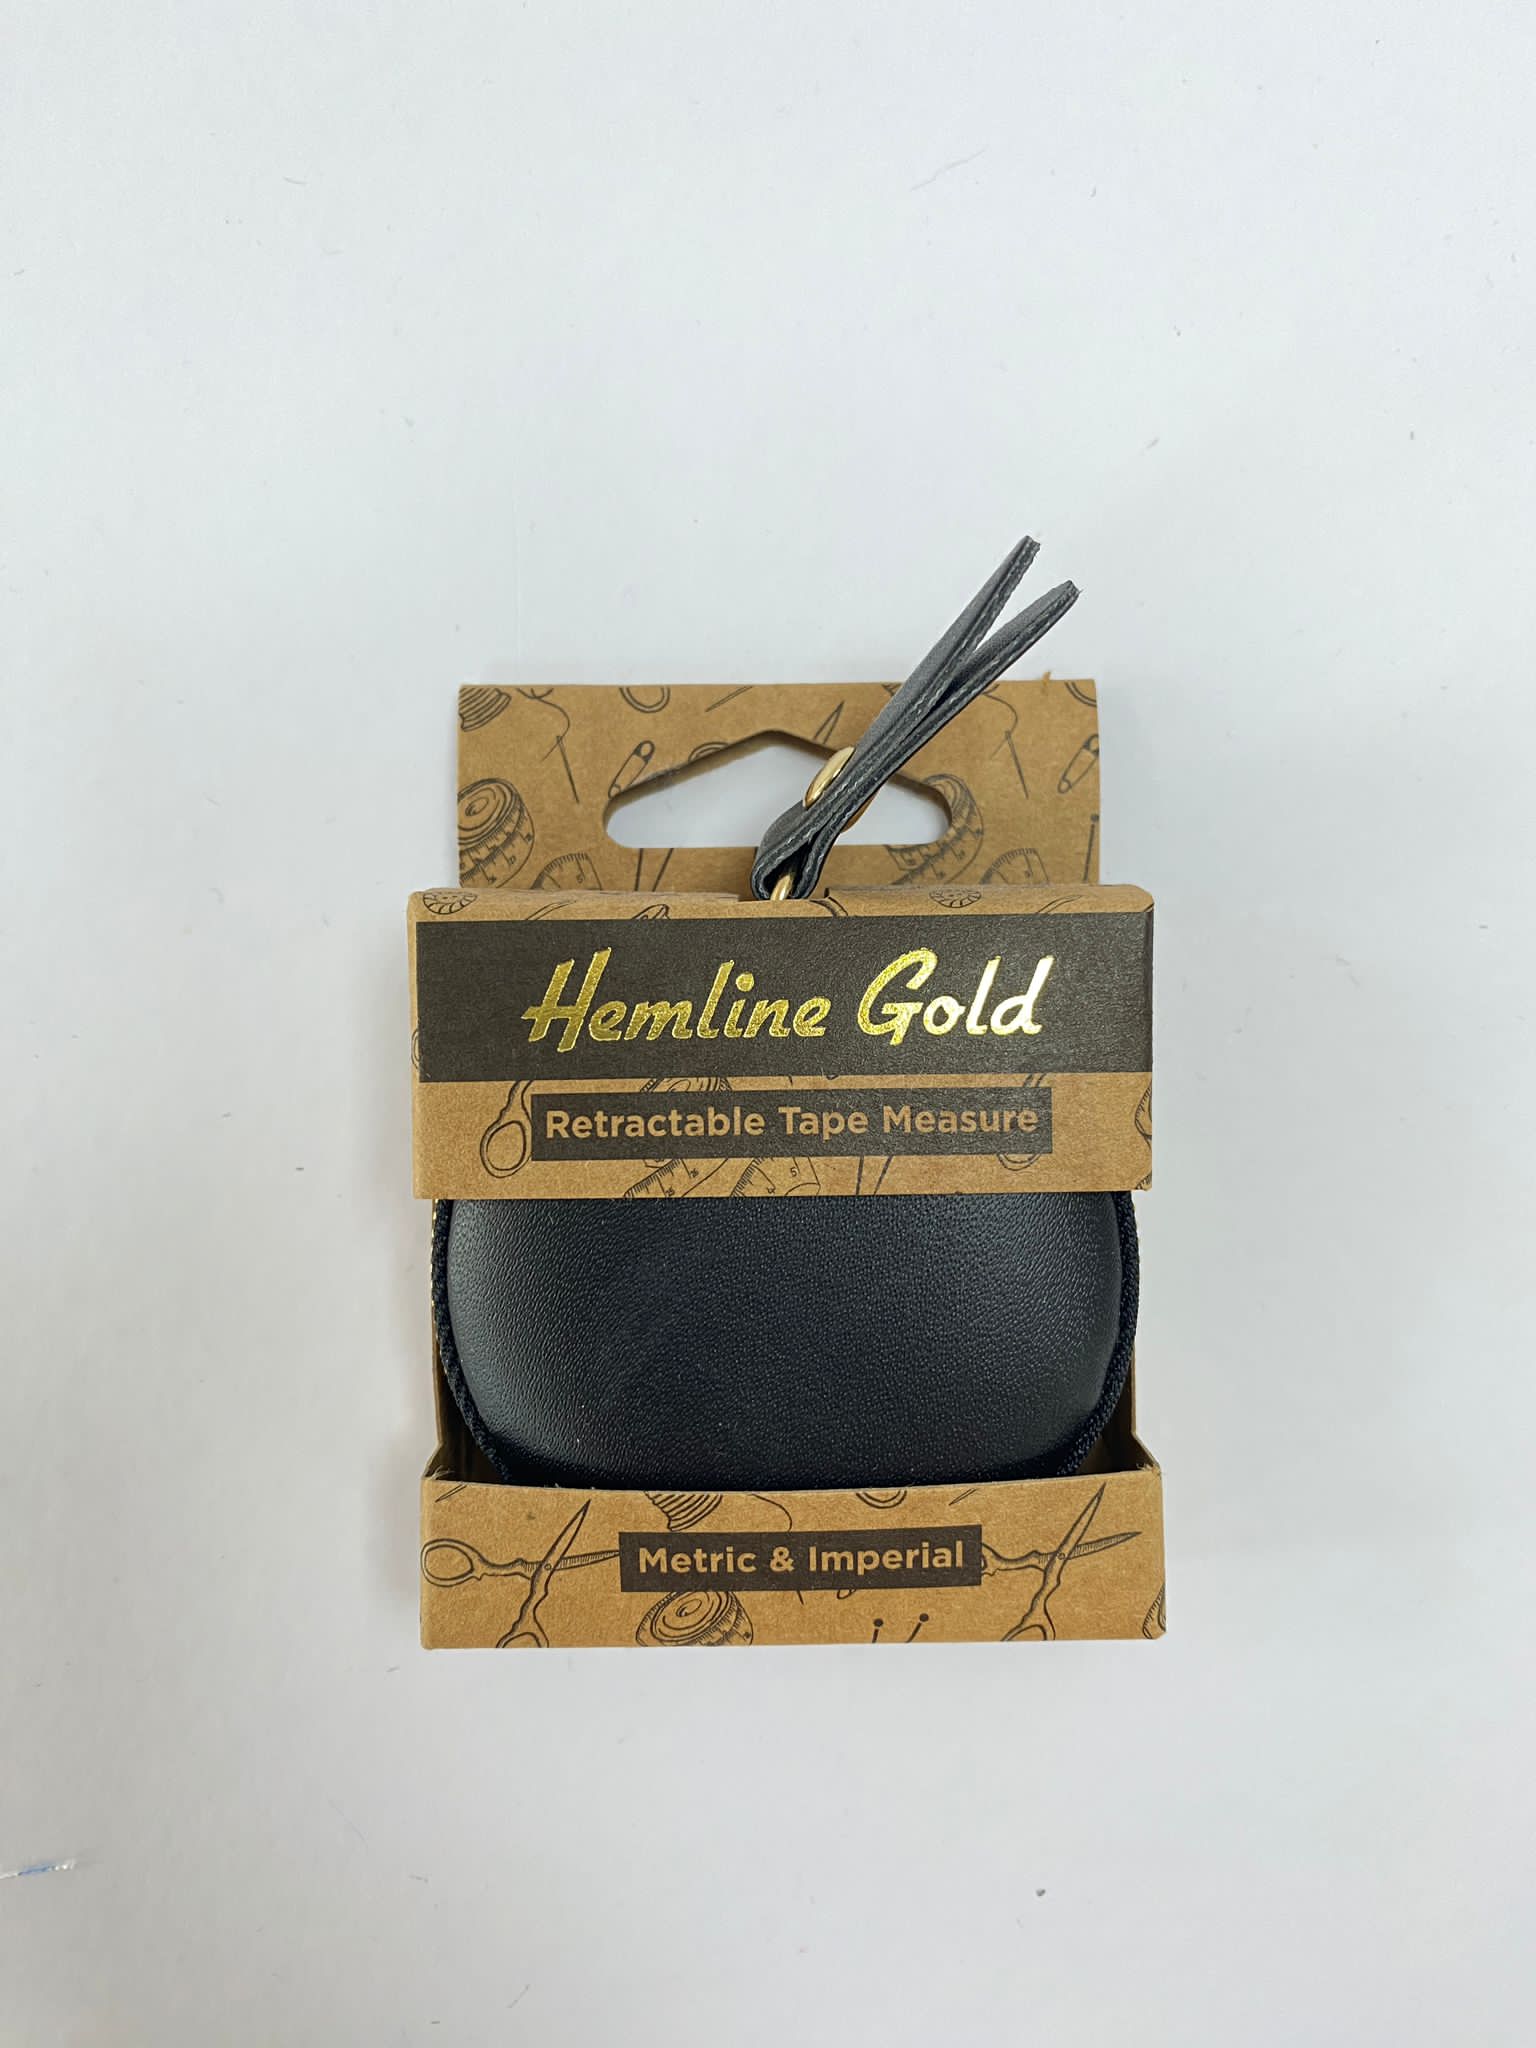 Hemline Gold Retractable Tape Measure